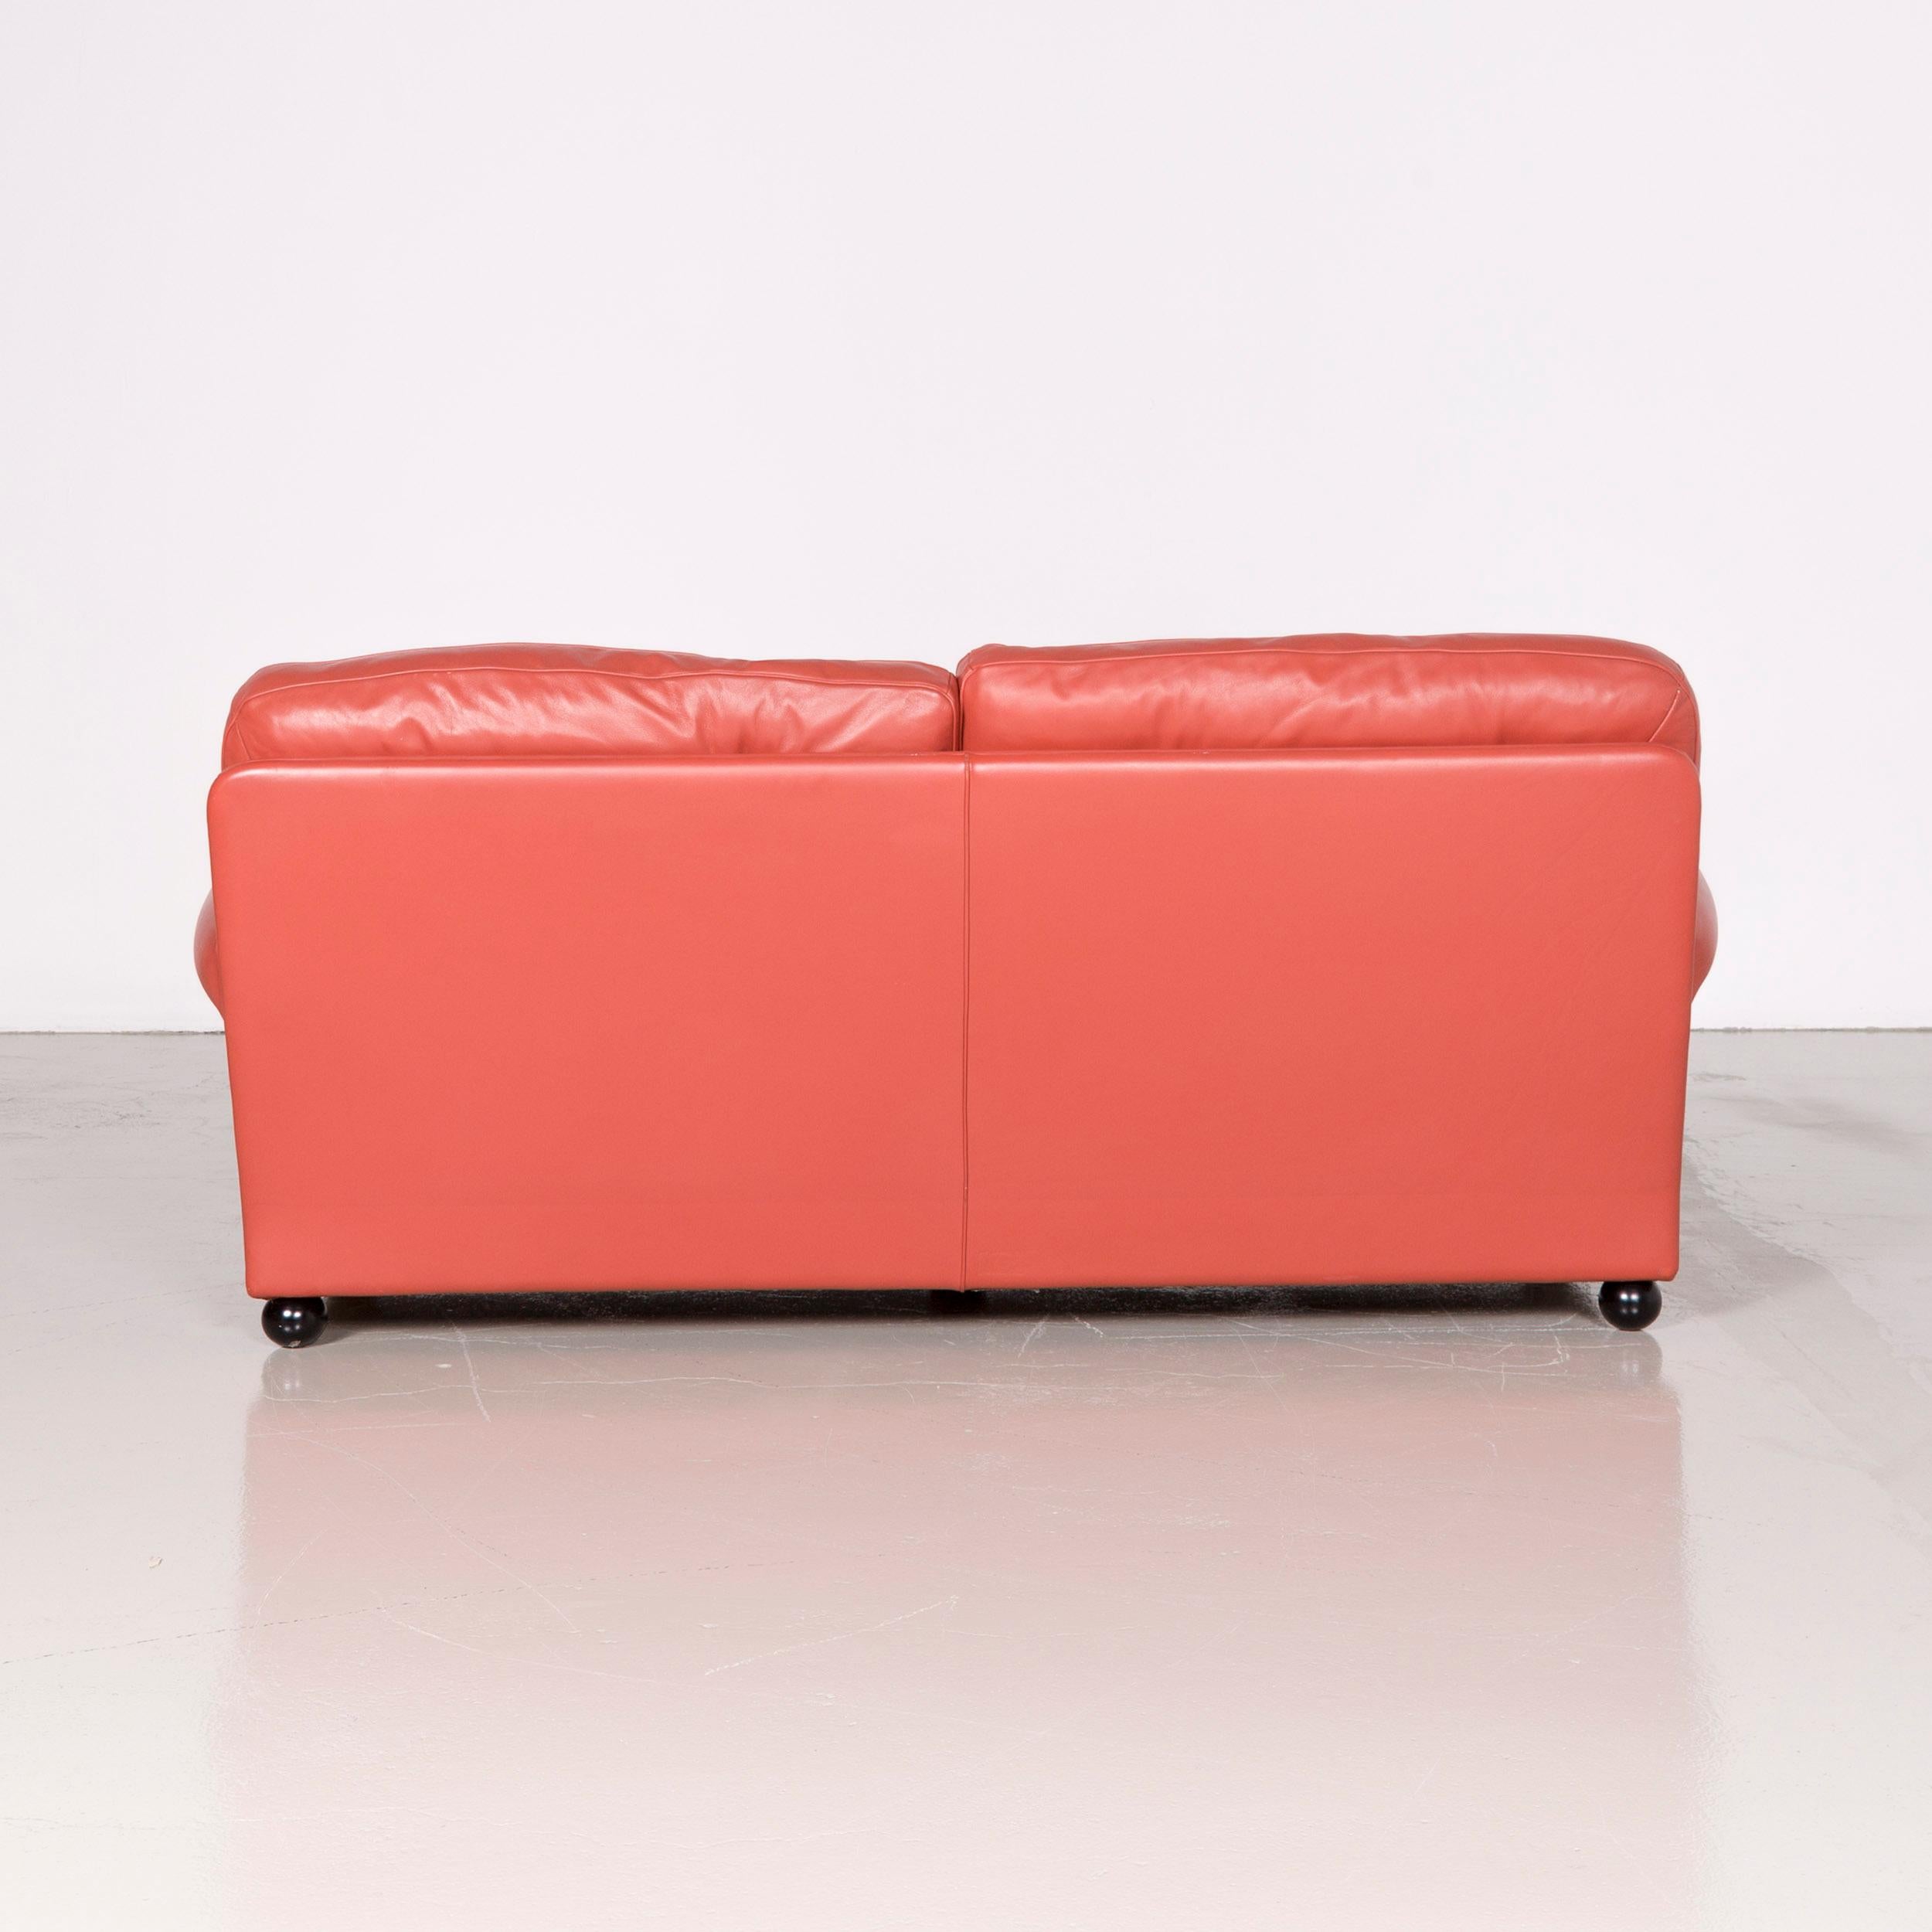 Poltrona Frau Dream on Designer Leather Two-Seat Couch Orange 6